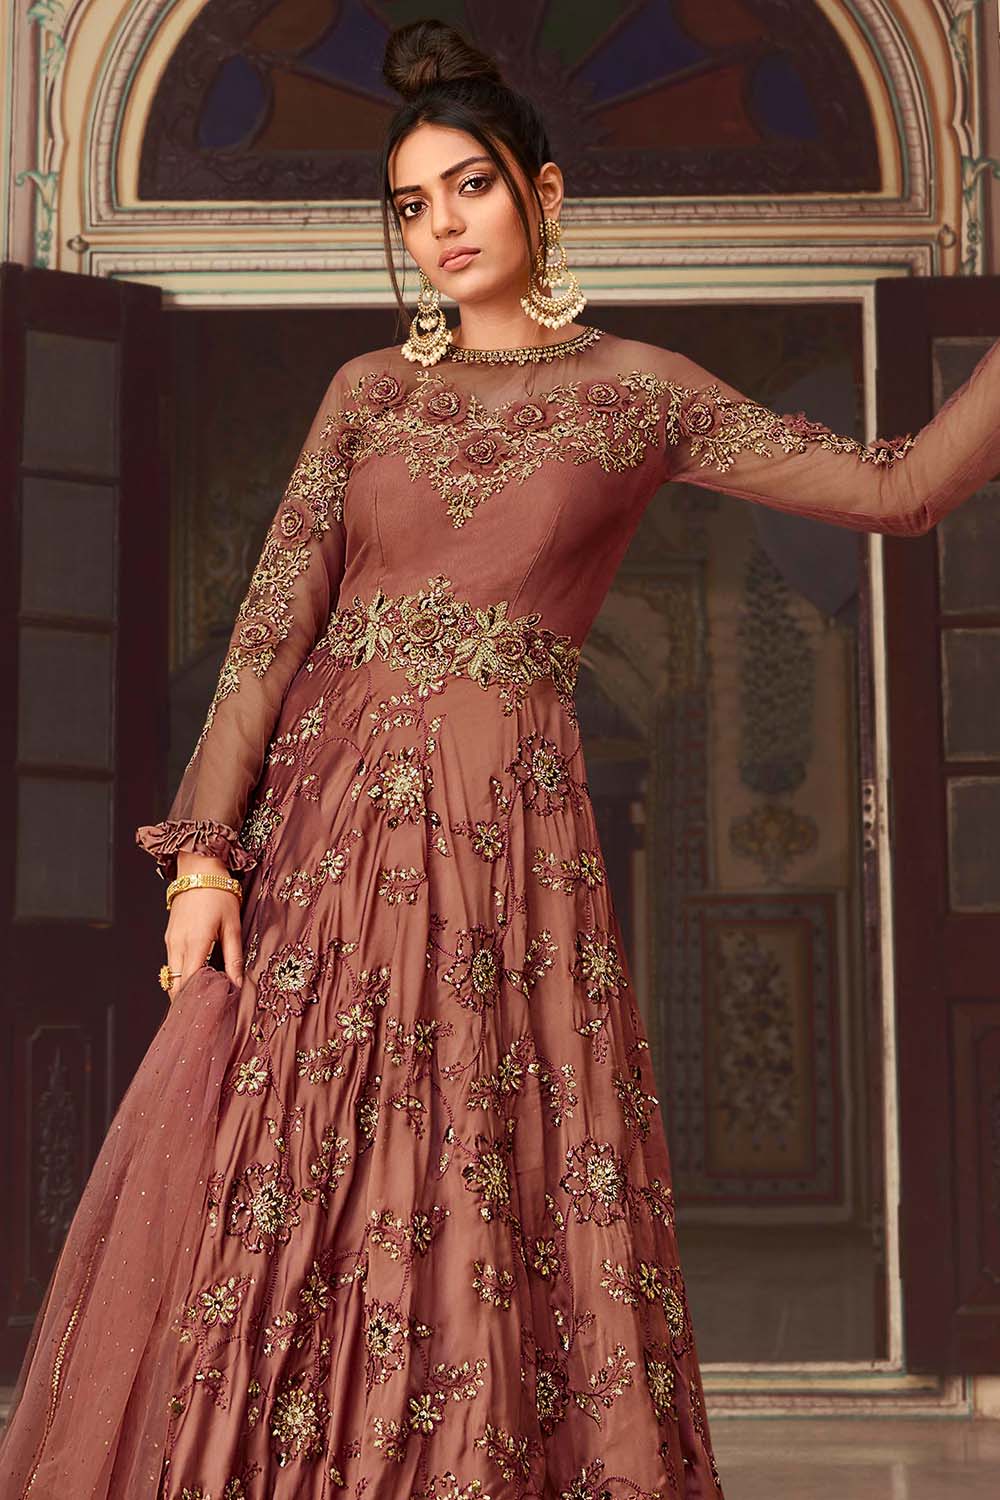 Anarkali dress design ideas / Anarkali gown design / Anarkali style kurti  designs / Anarkali suits - YouTube